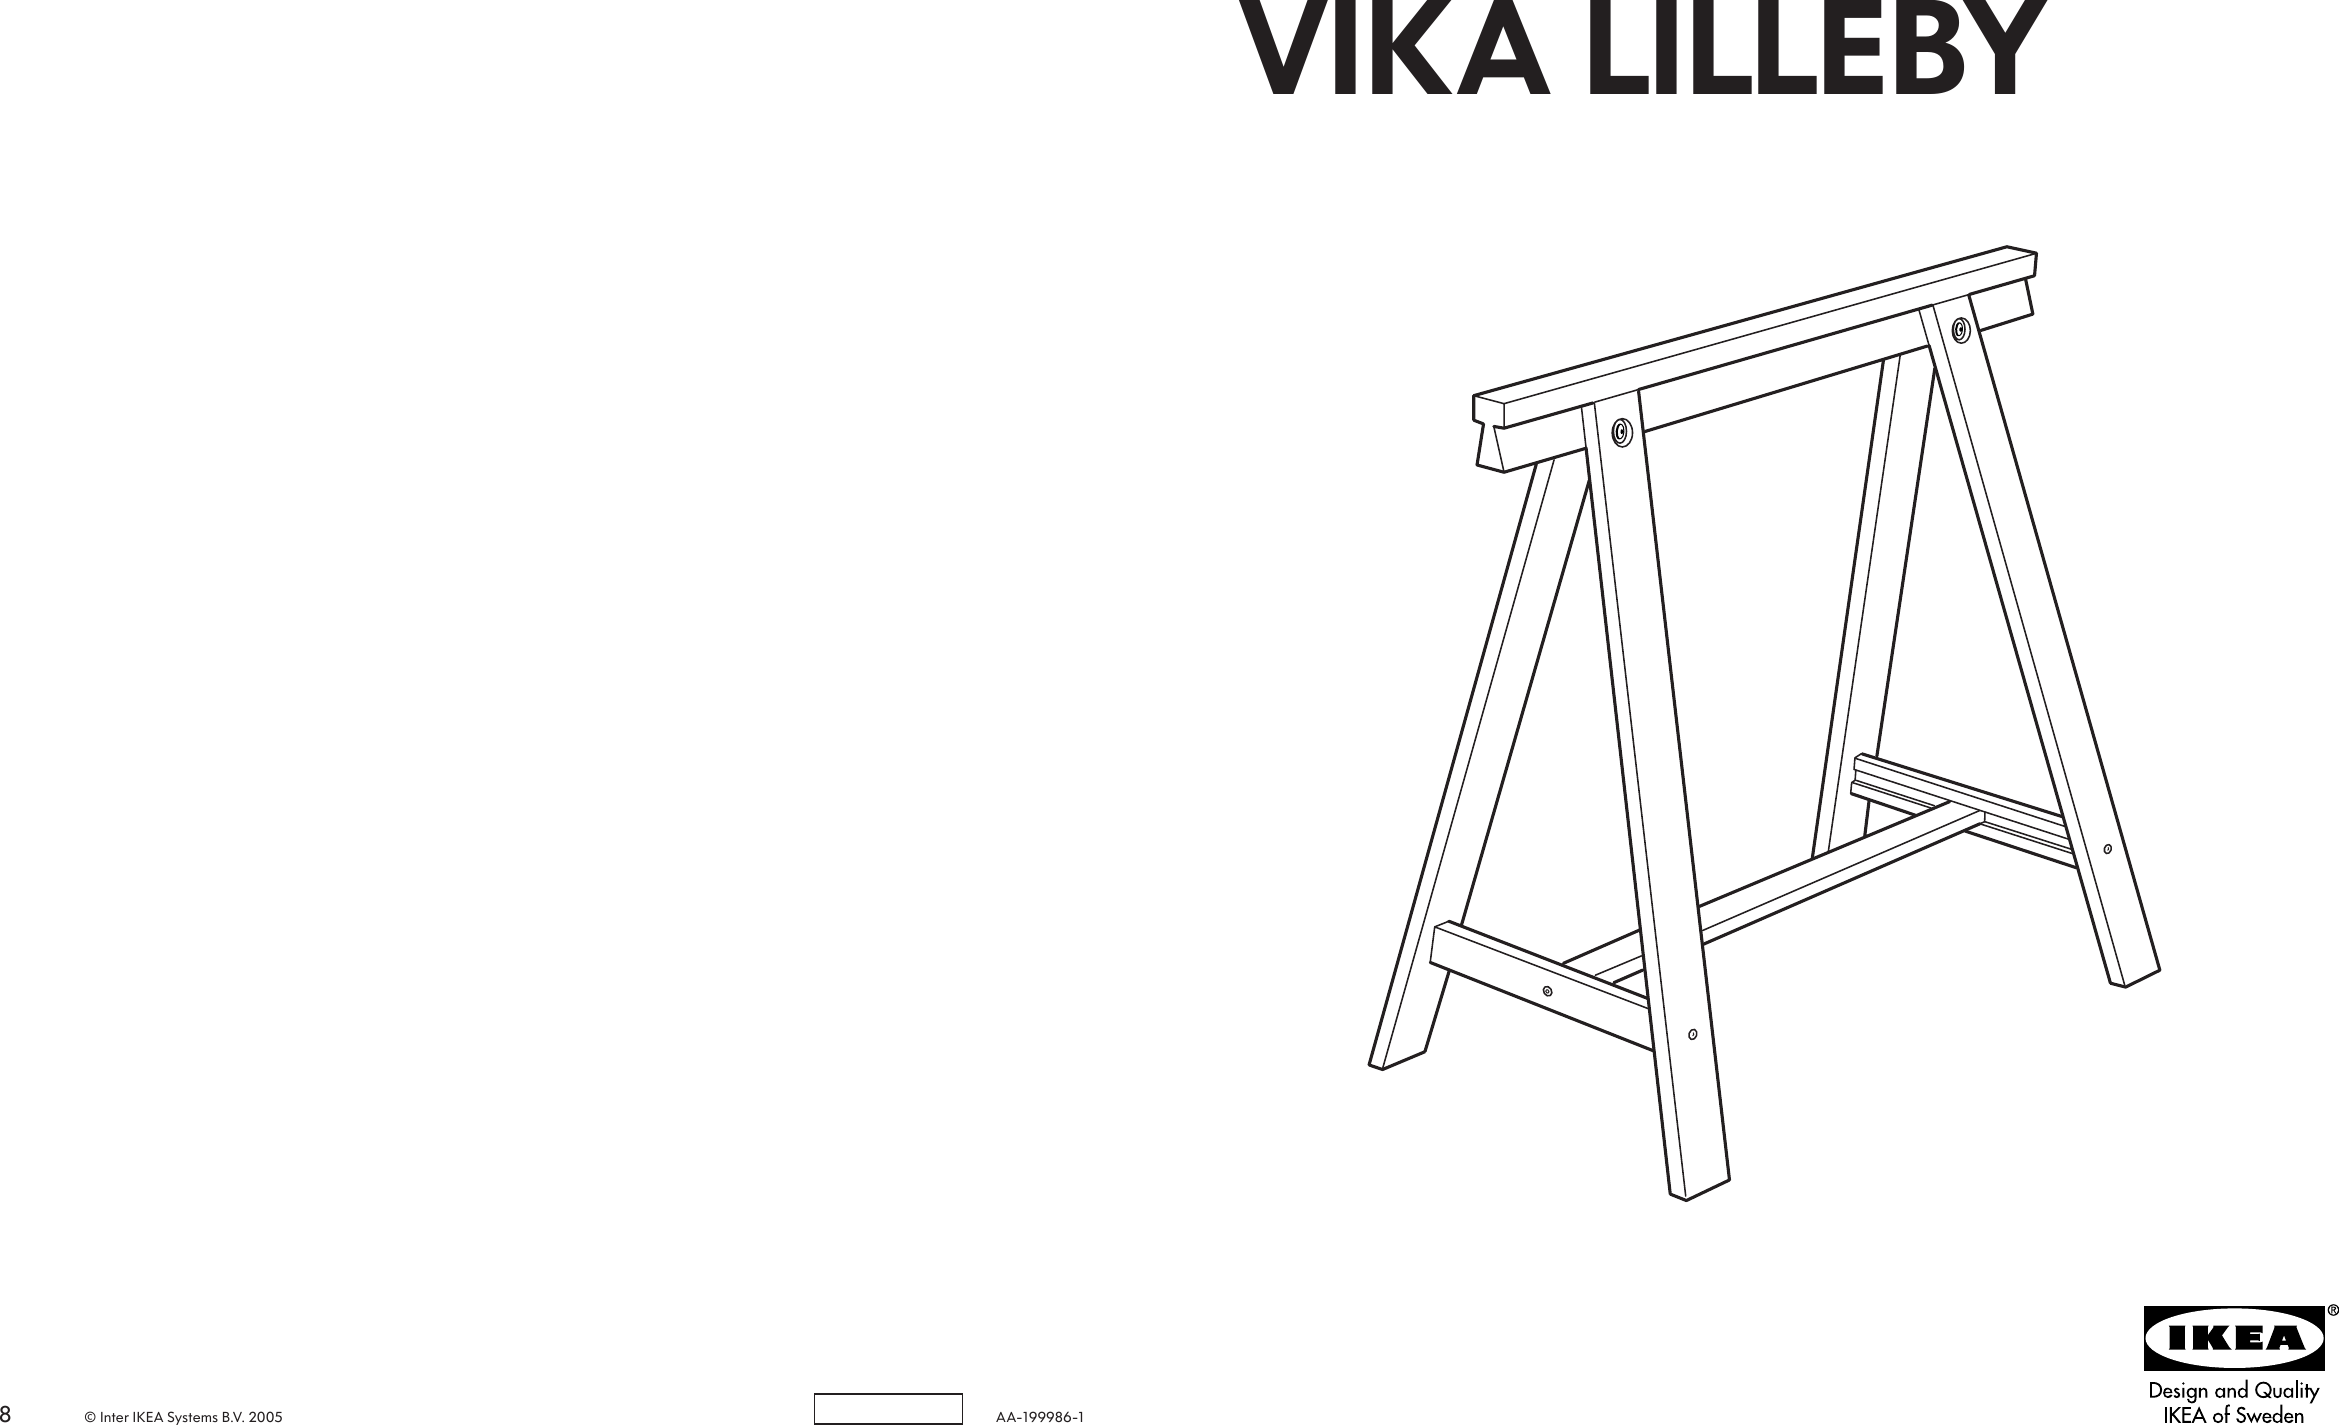 Page 1 of 4 - Ikea Ikea-Vika-Lilleby-Trestle-28X28-Assembly-Instruction